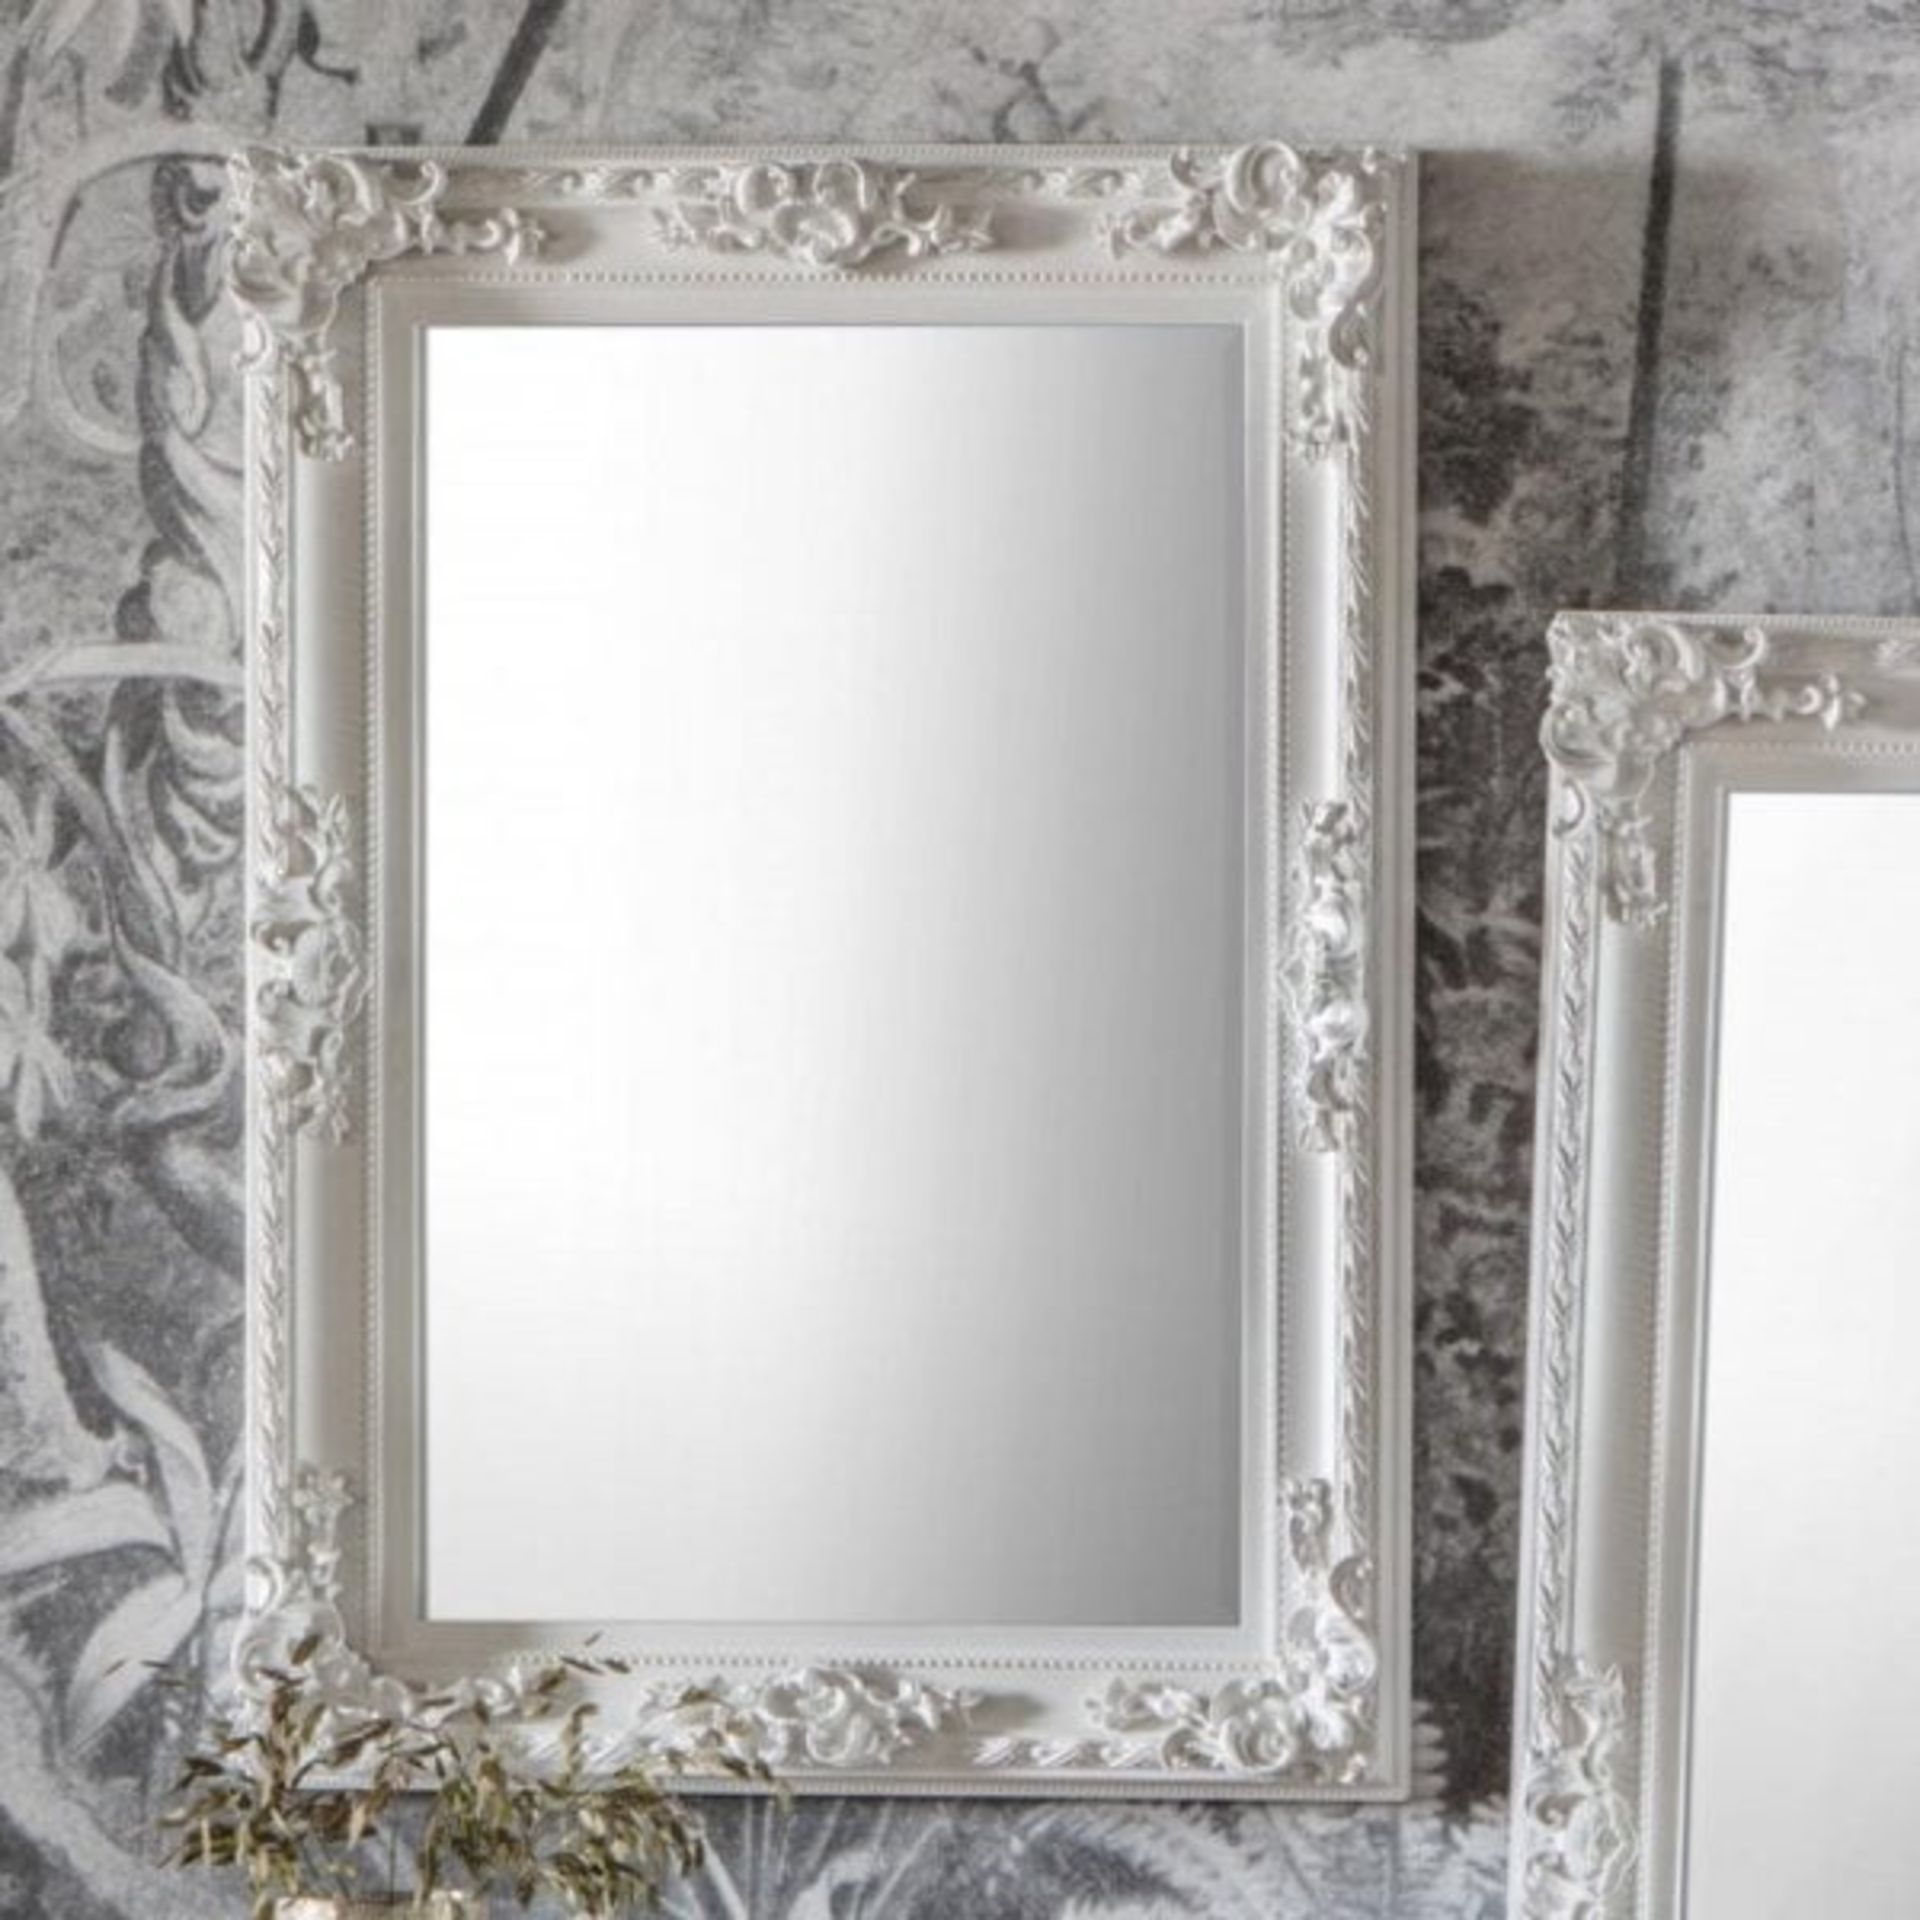 Altori Rectangle Mirror Silver 830 x 1140 The Altori Antique French Style Rectangle Mirror Is The